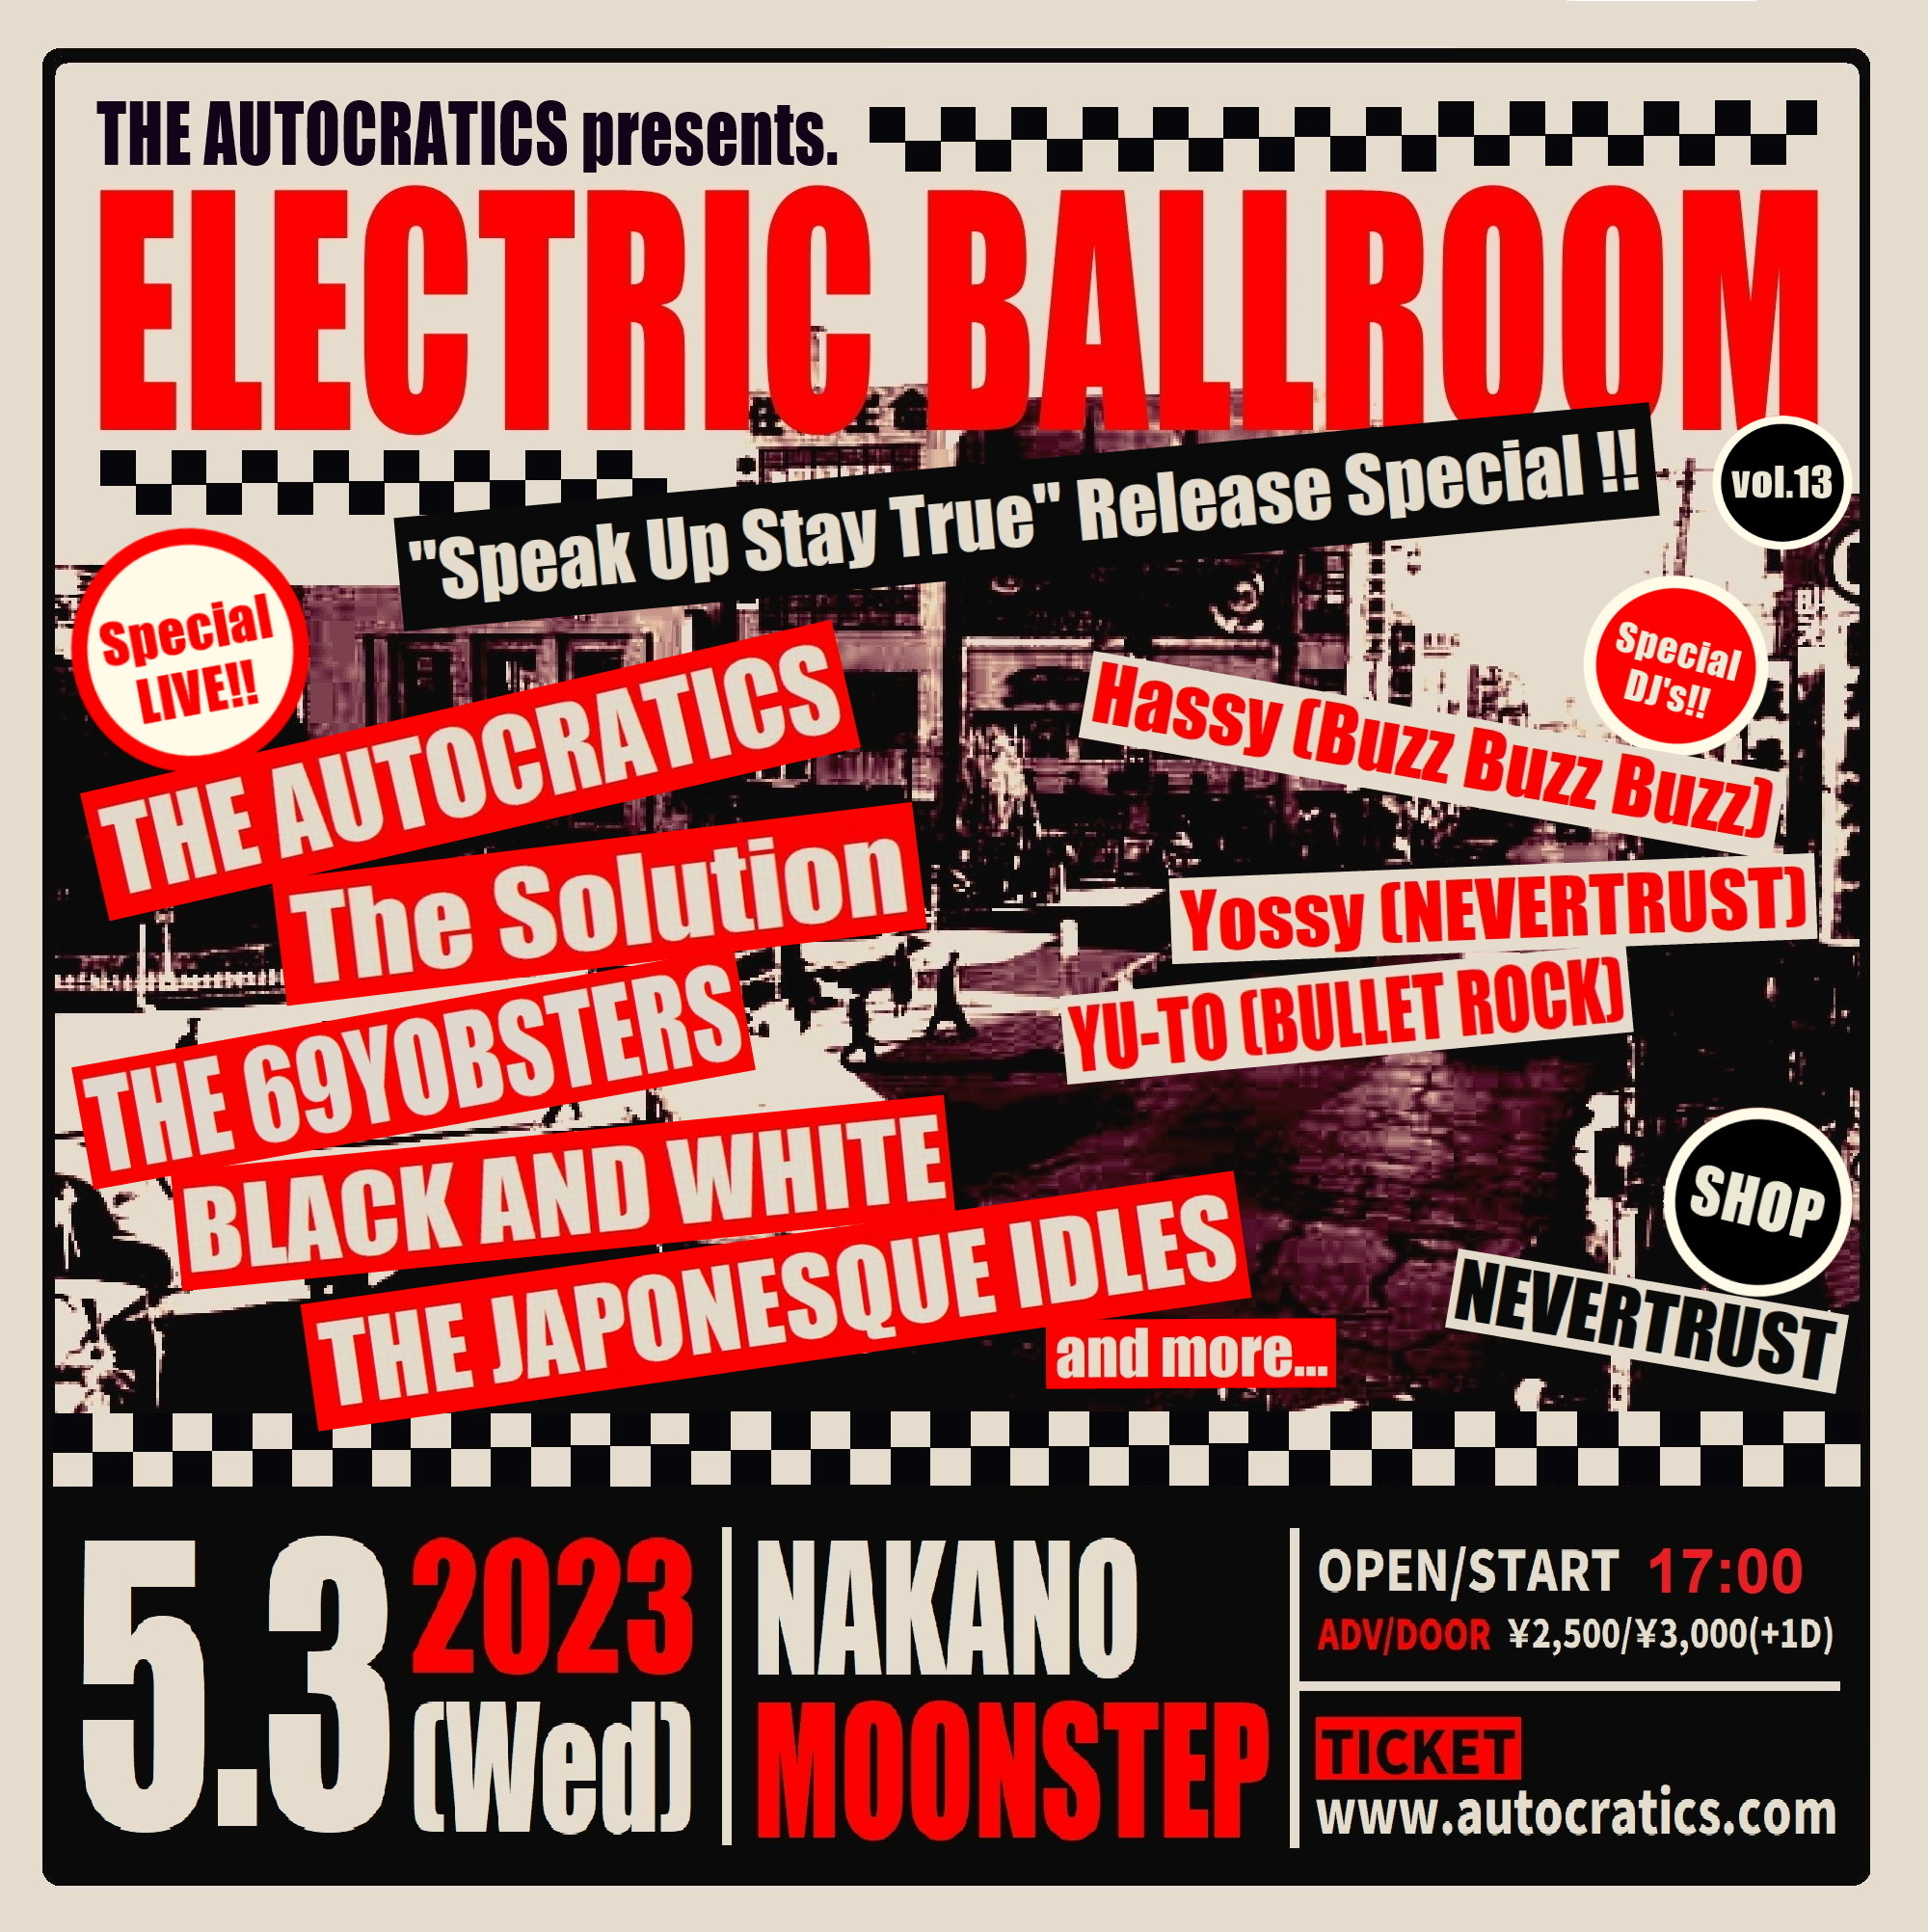 “ELECTRIC BALLROOM vol.13” 「Speak Up Stay True」Release Special!!